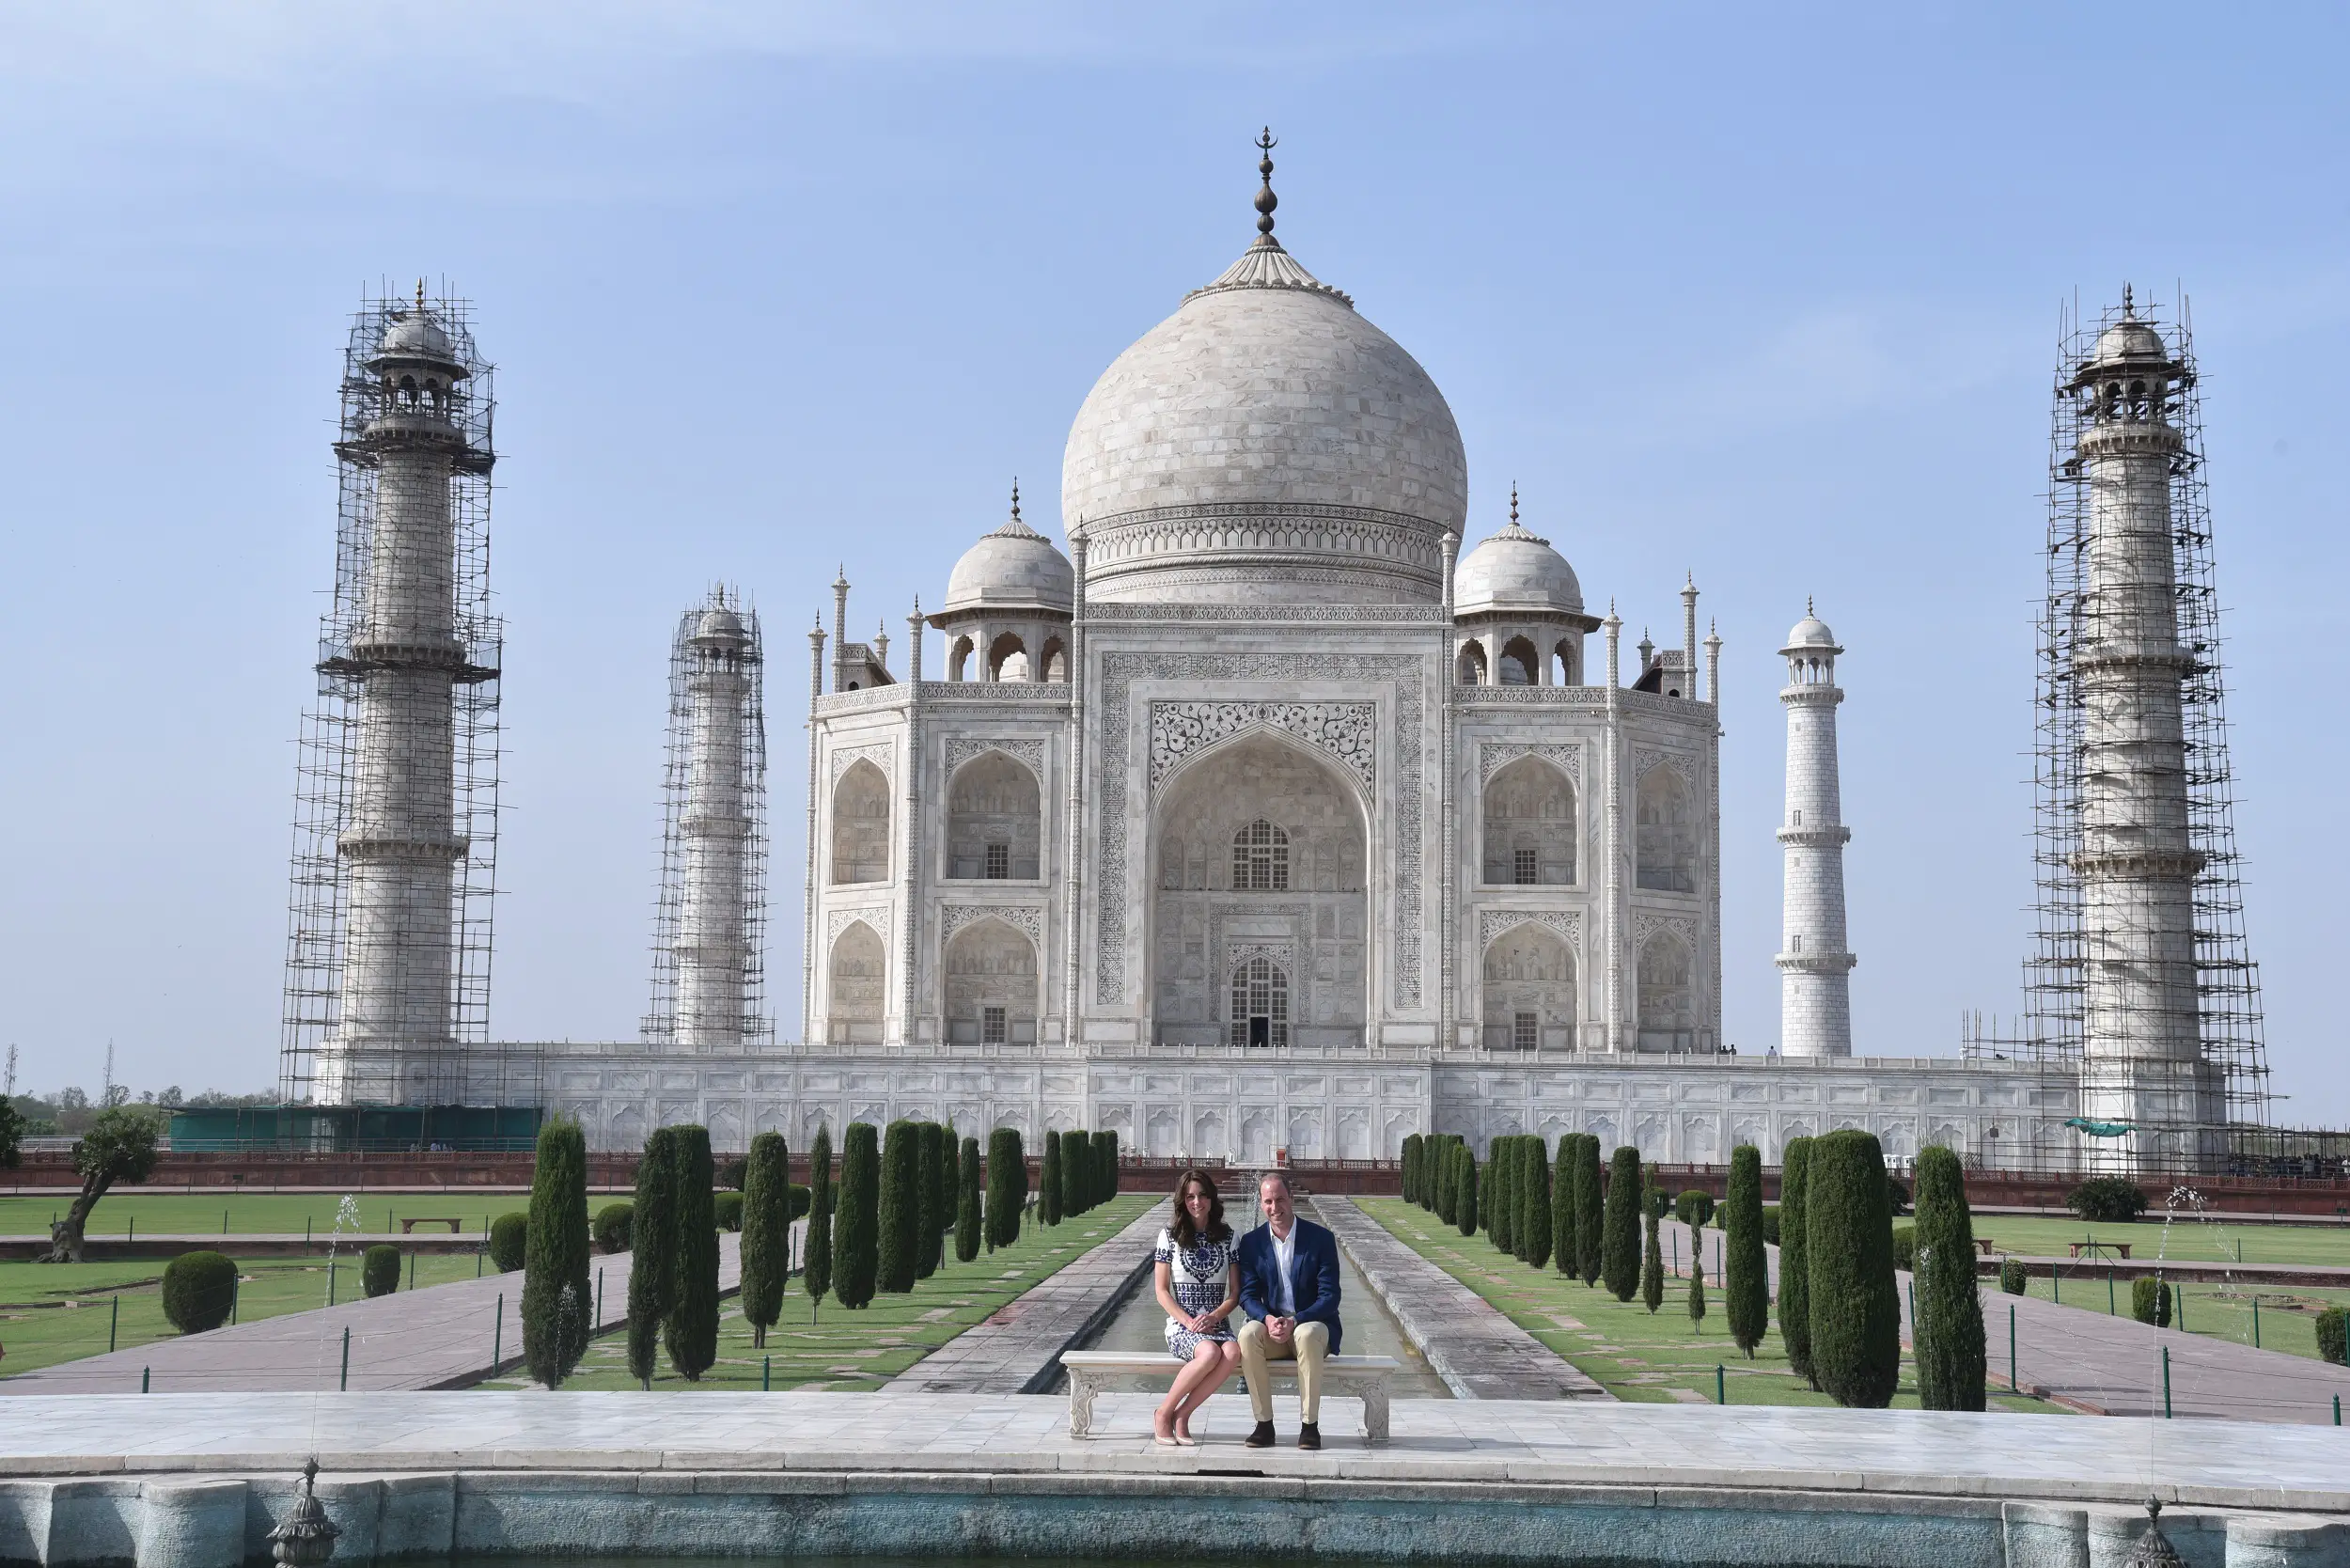 Duke and Duchess of Cambridge visited The Taj Mahal during the India tour